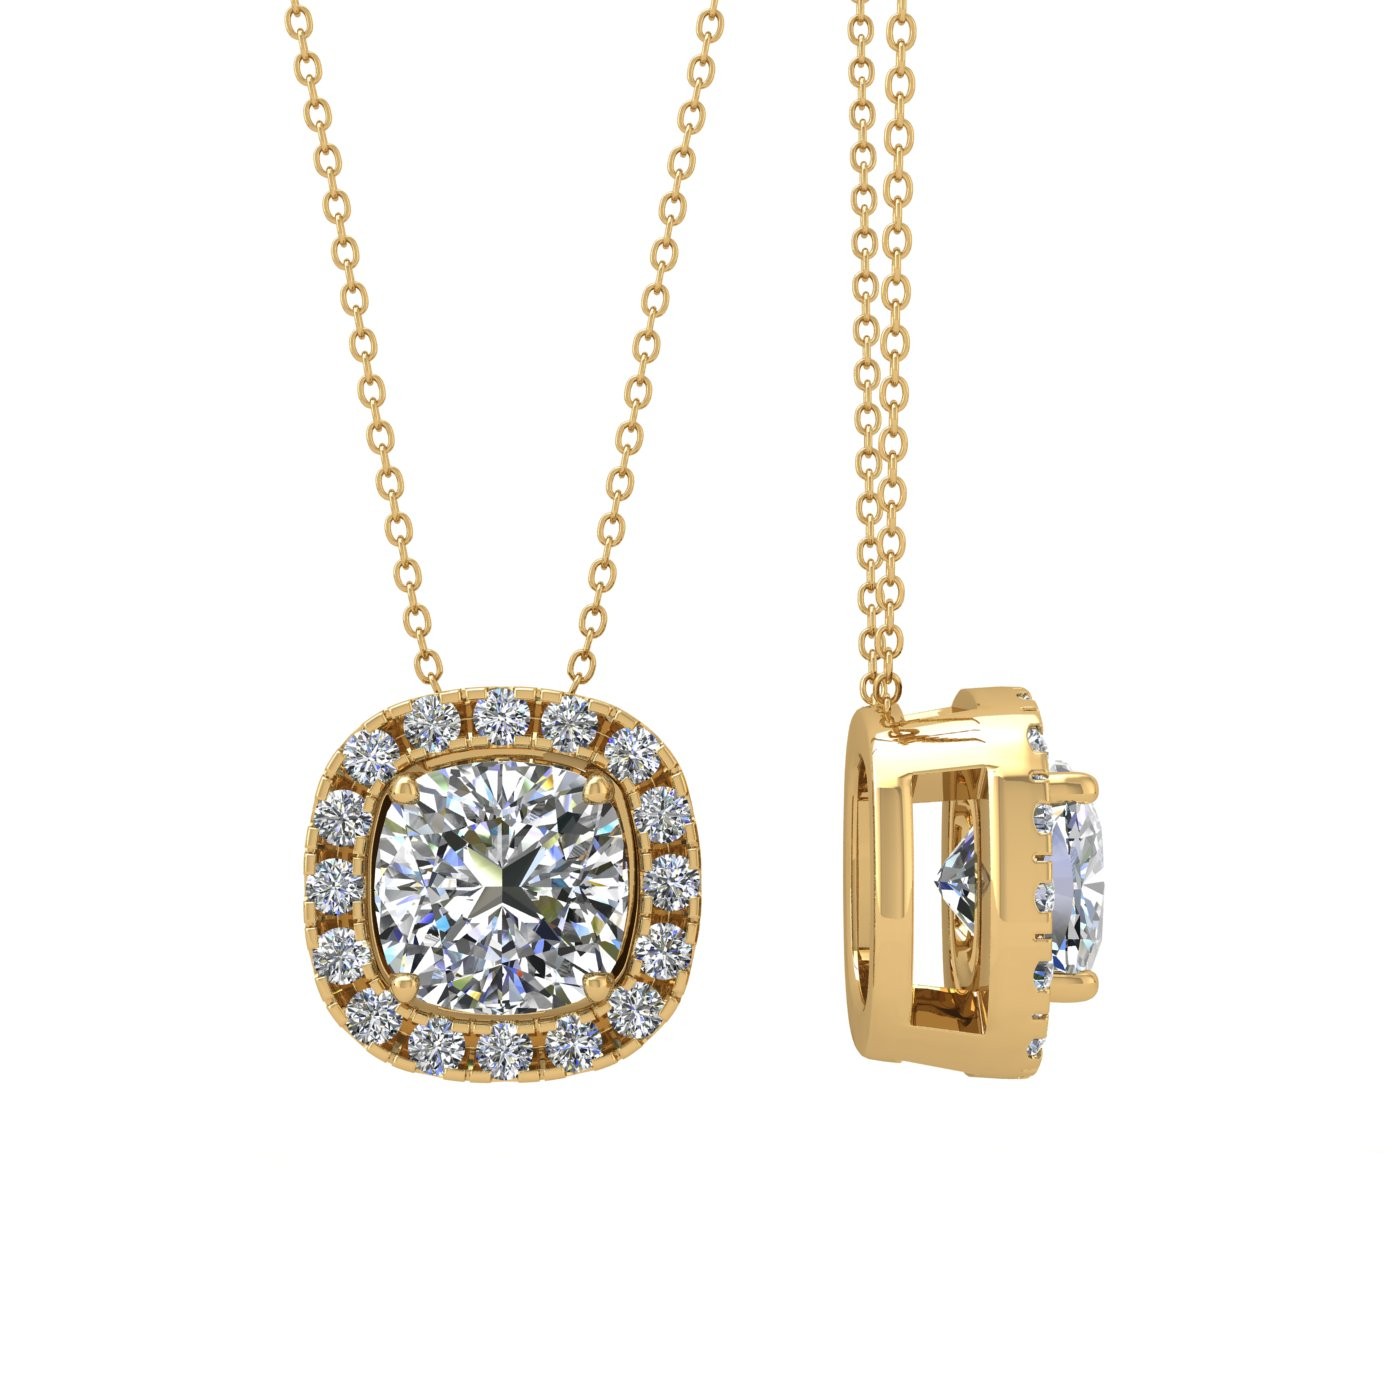 18k yellow gold  2,5 ct 4 prongs cushion shape diamond pendant with diamond pavÉ set halo Photos & images